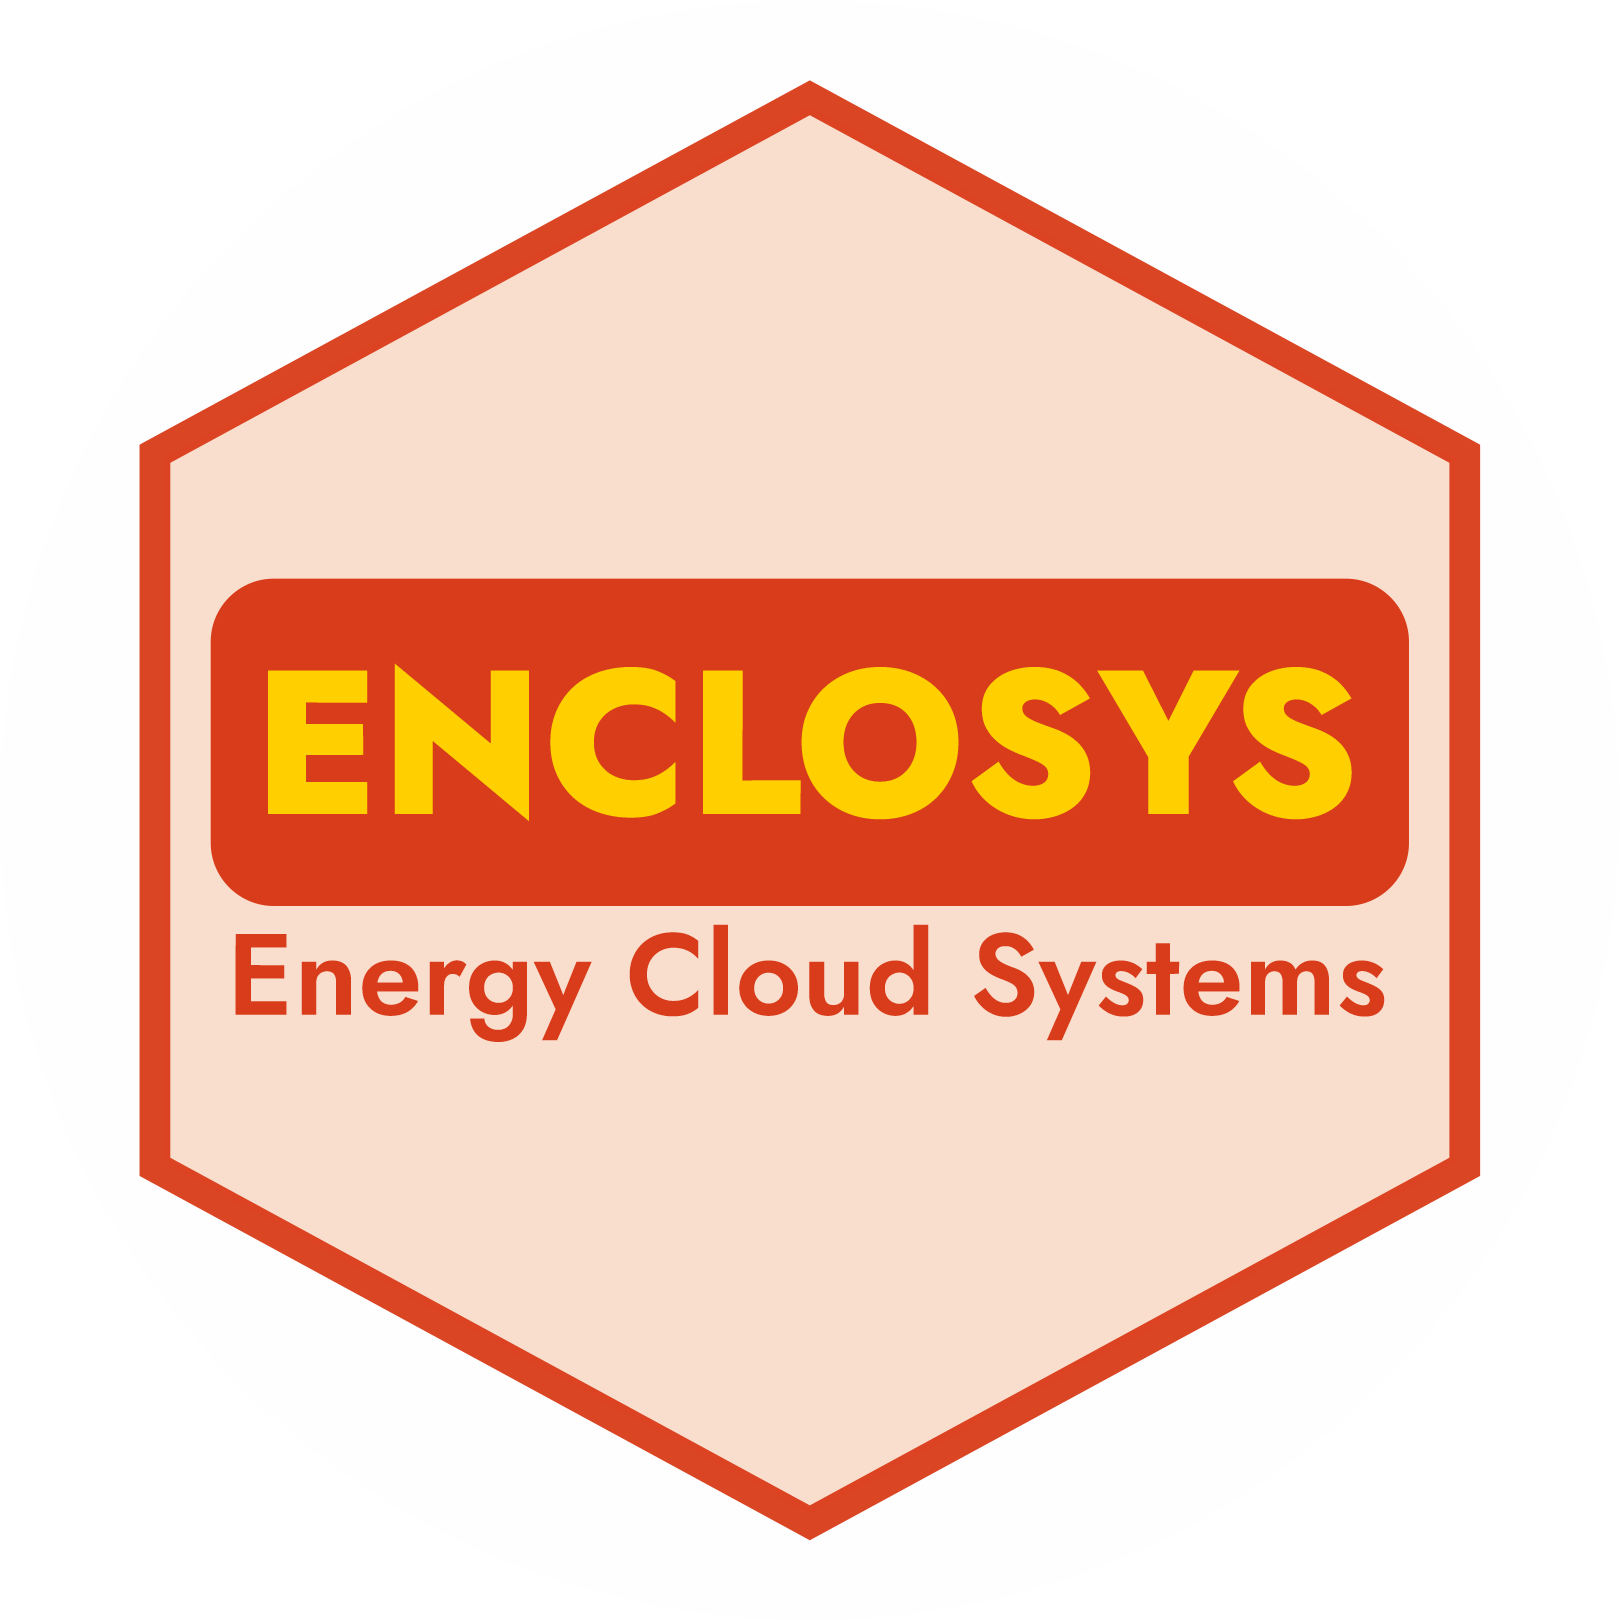 ENCLOSYS ⚡ ENERGY CLOUD SYSTEMS